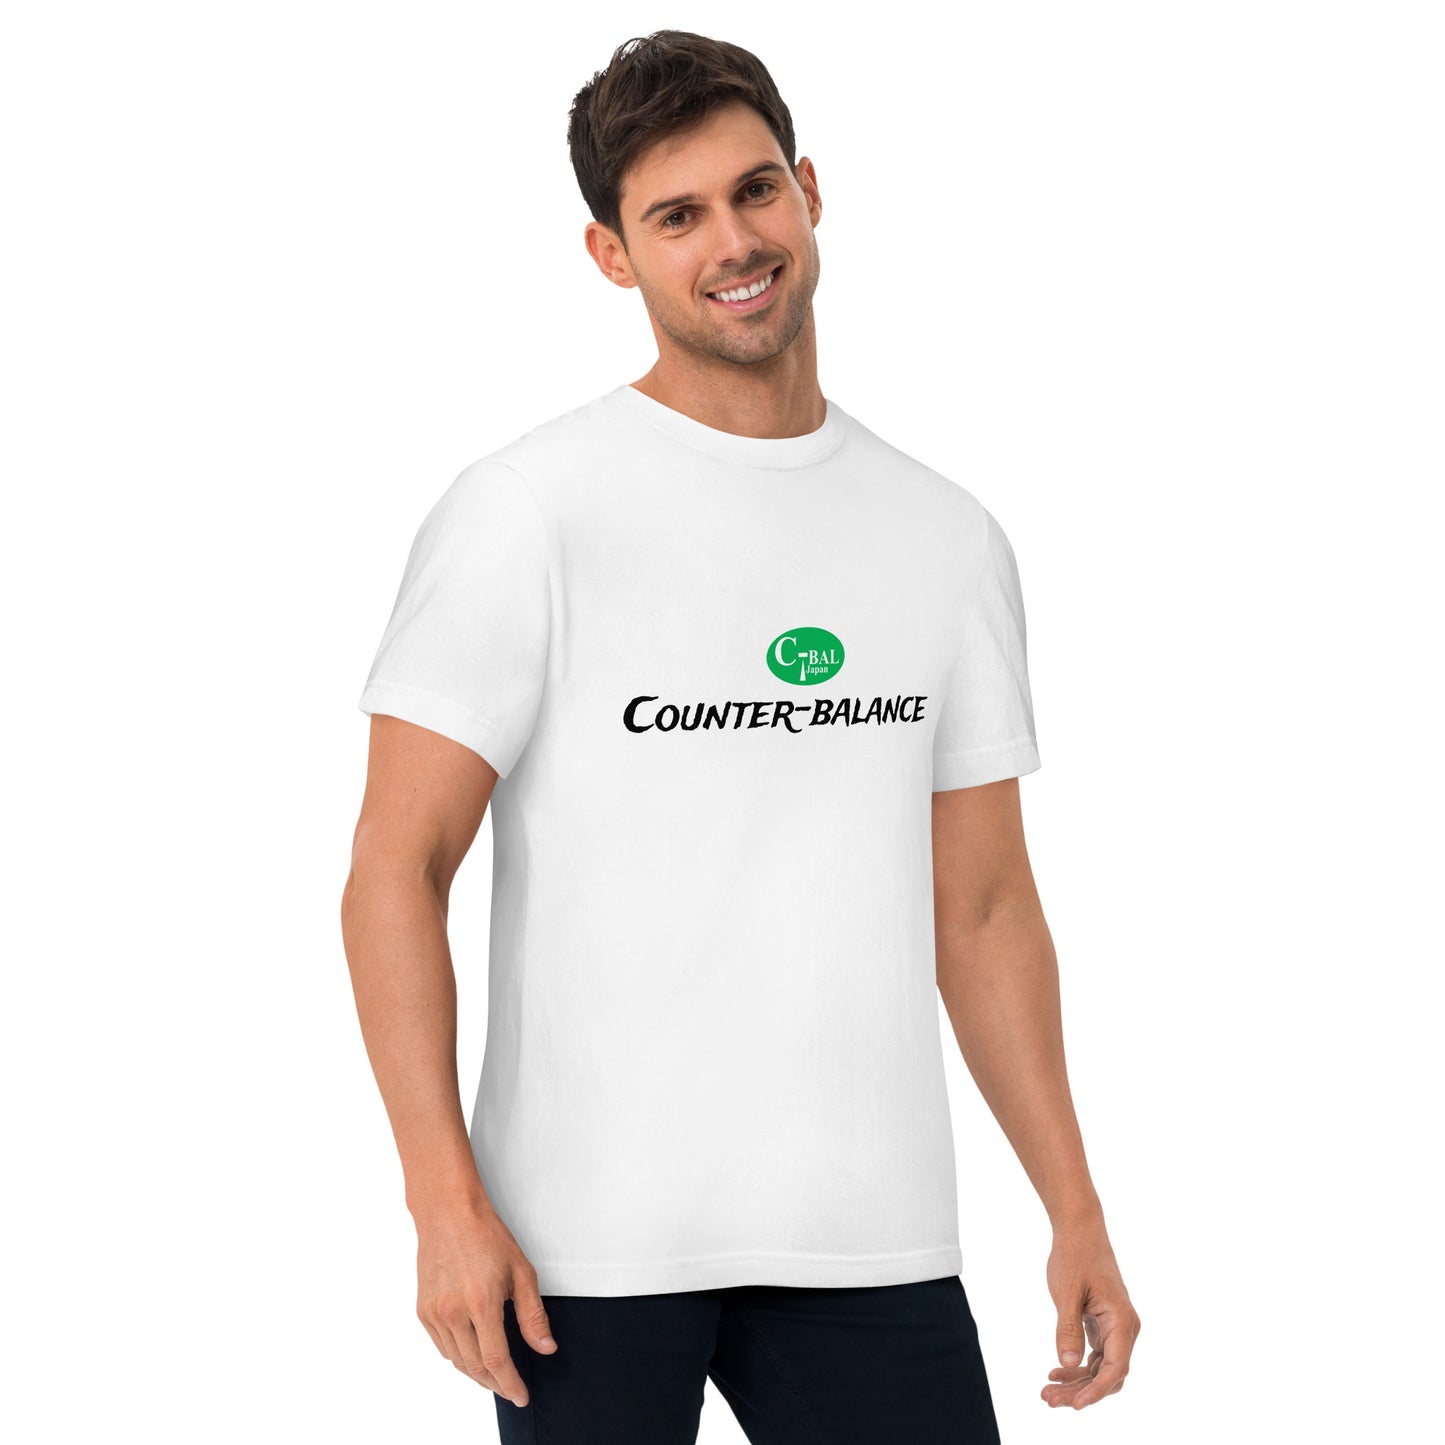 A003 - High Quality Cotton T-shirt (C-BAL : White / Green)